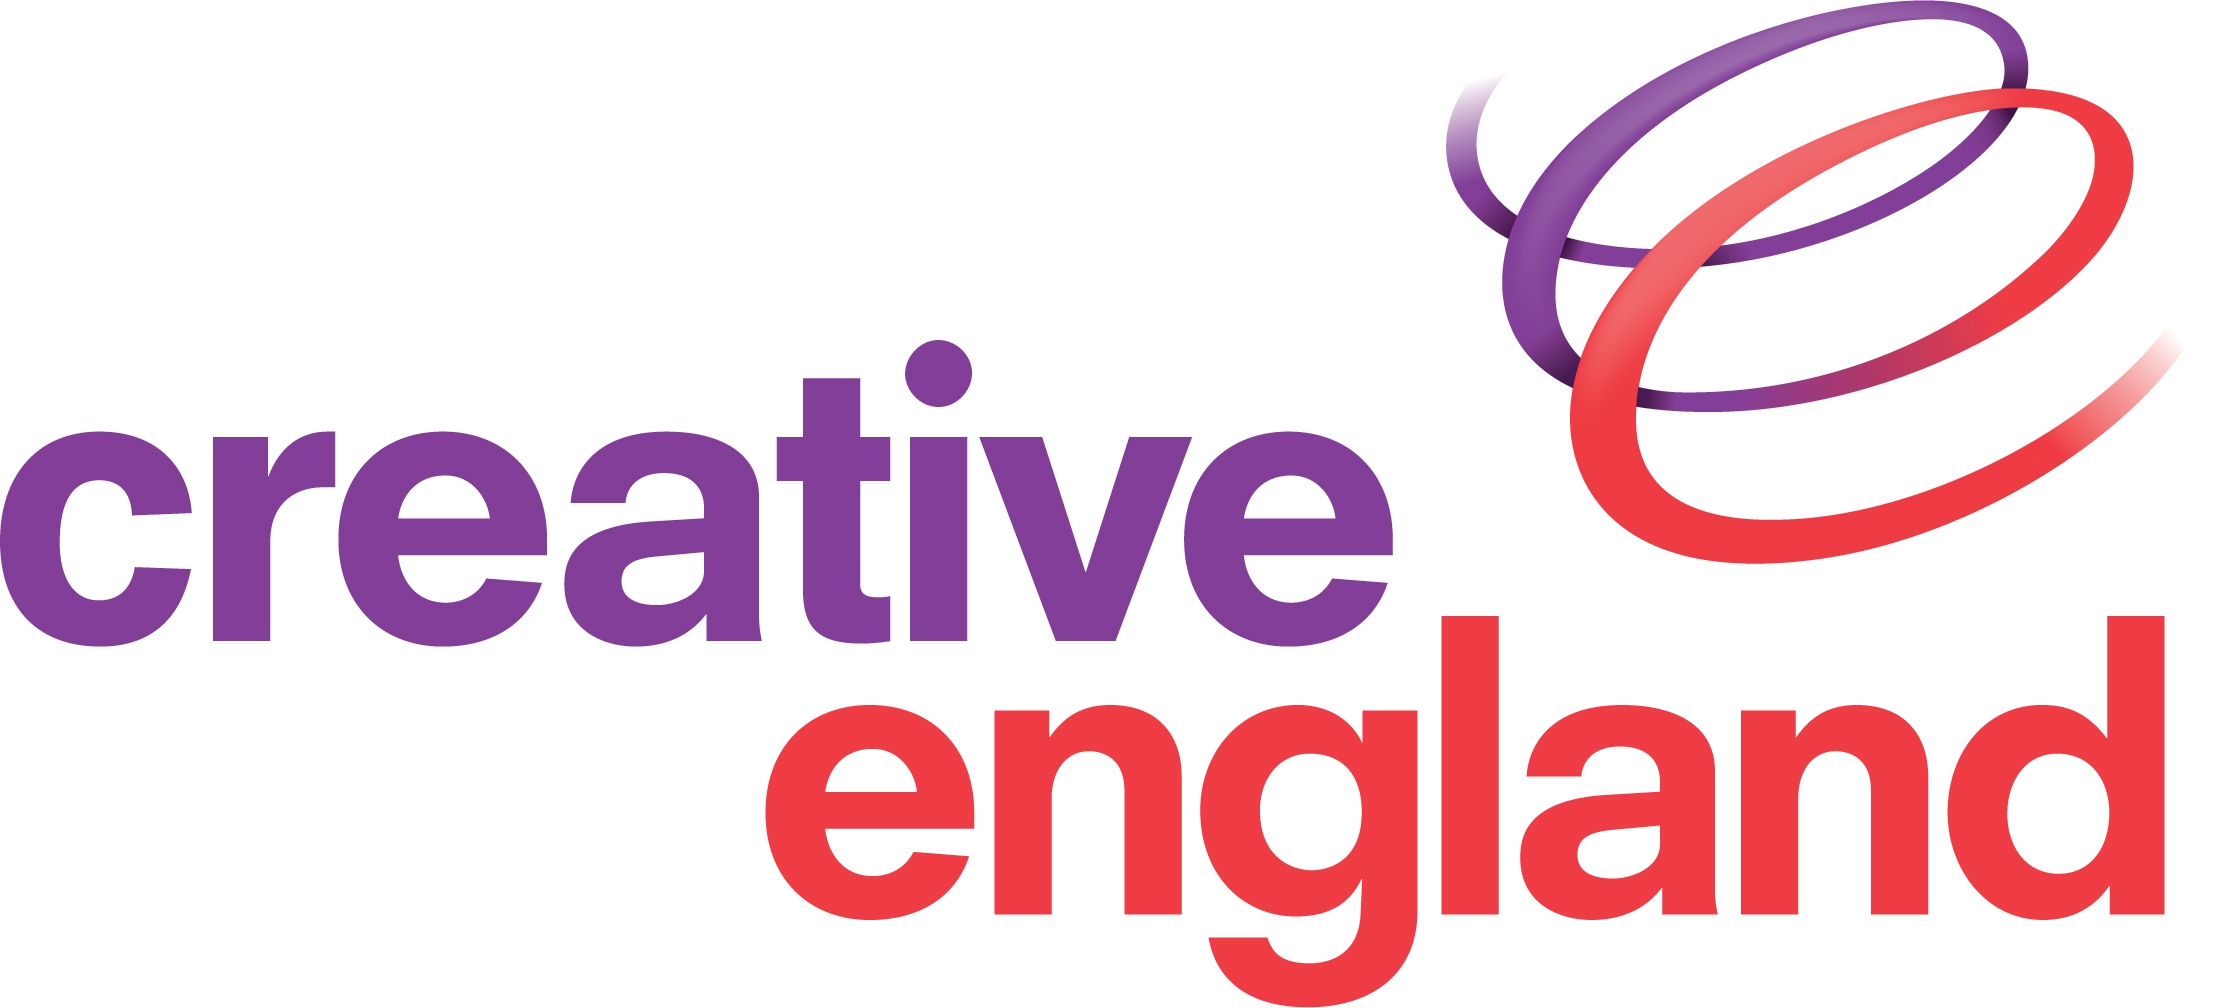 Creative-England-new-logo-2_0.jpg